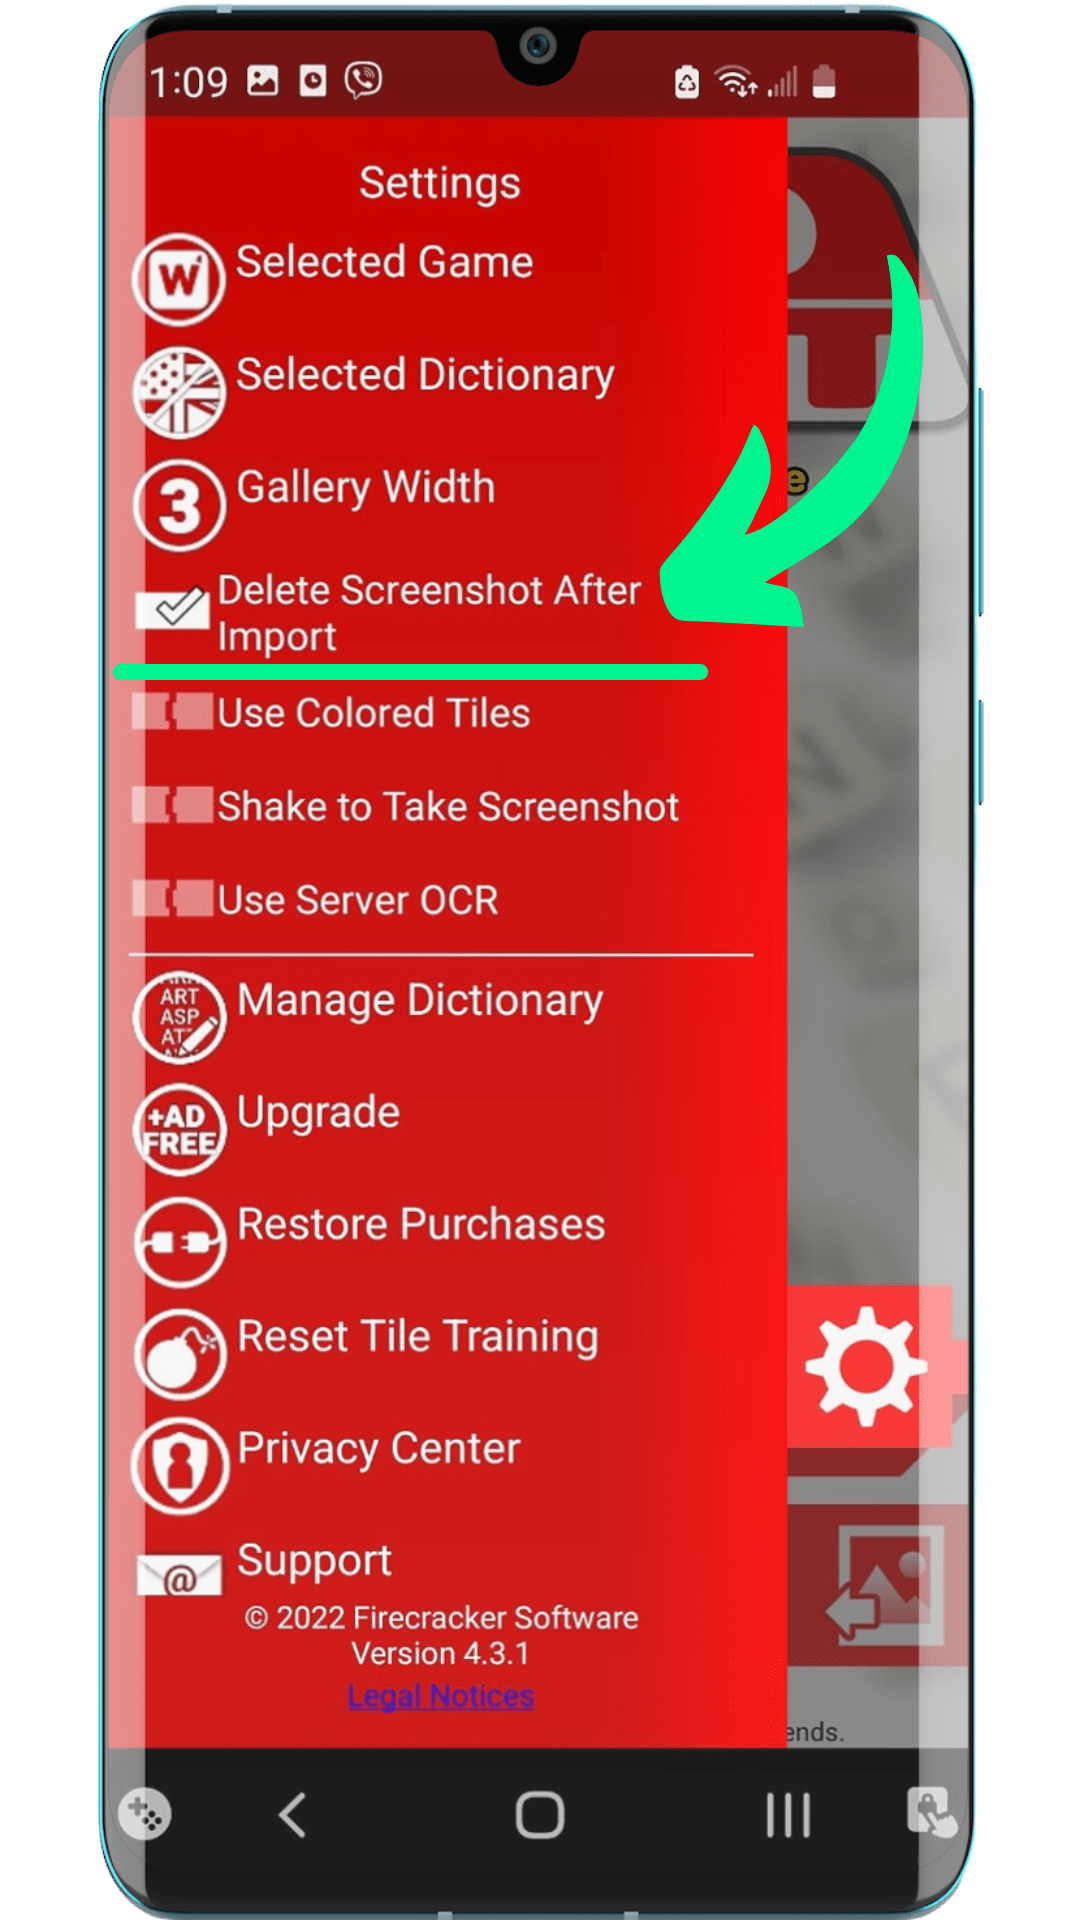 Turn on Delete Screenshot After Import